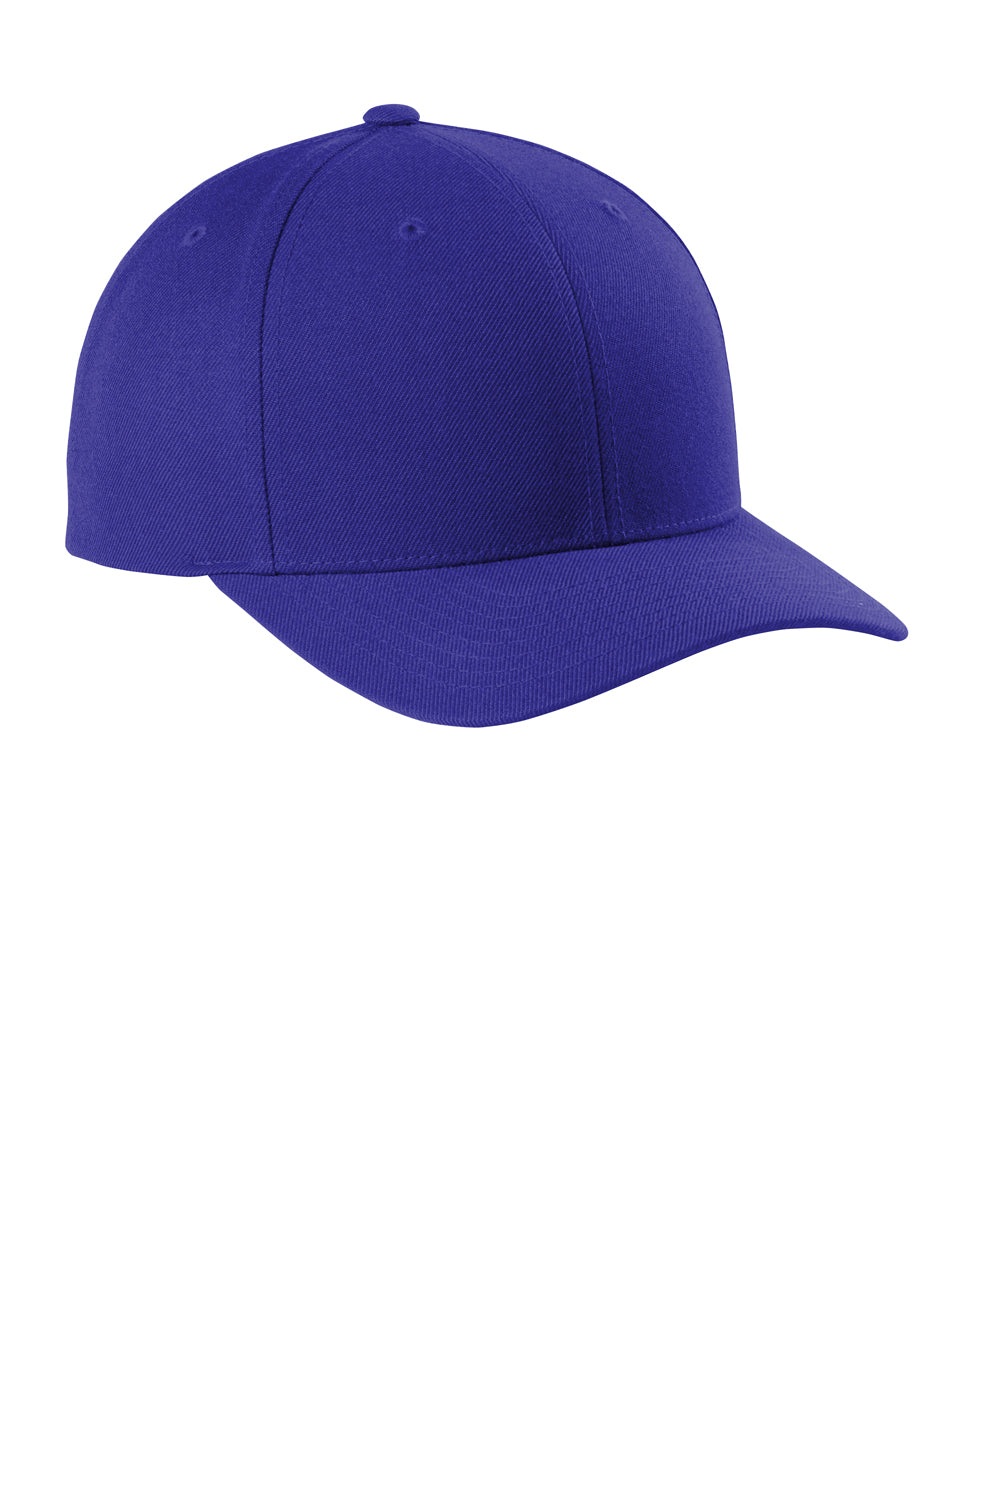 Sport-Tek STC43 Curve Bill Snapback Hat True Royal Blue Front